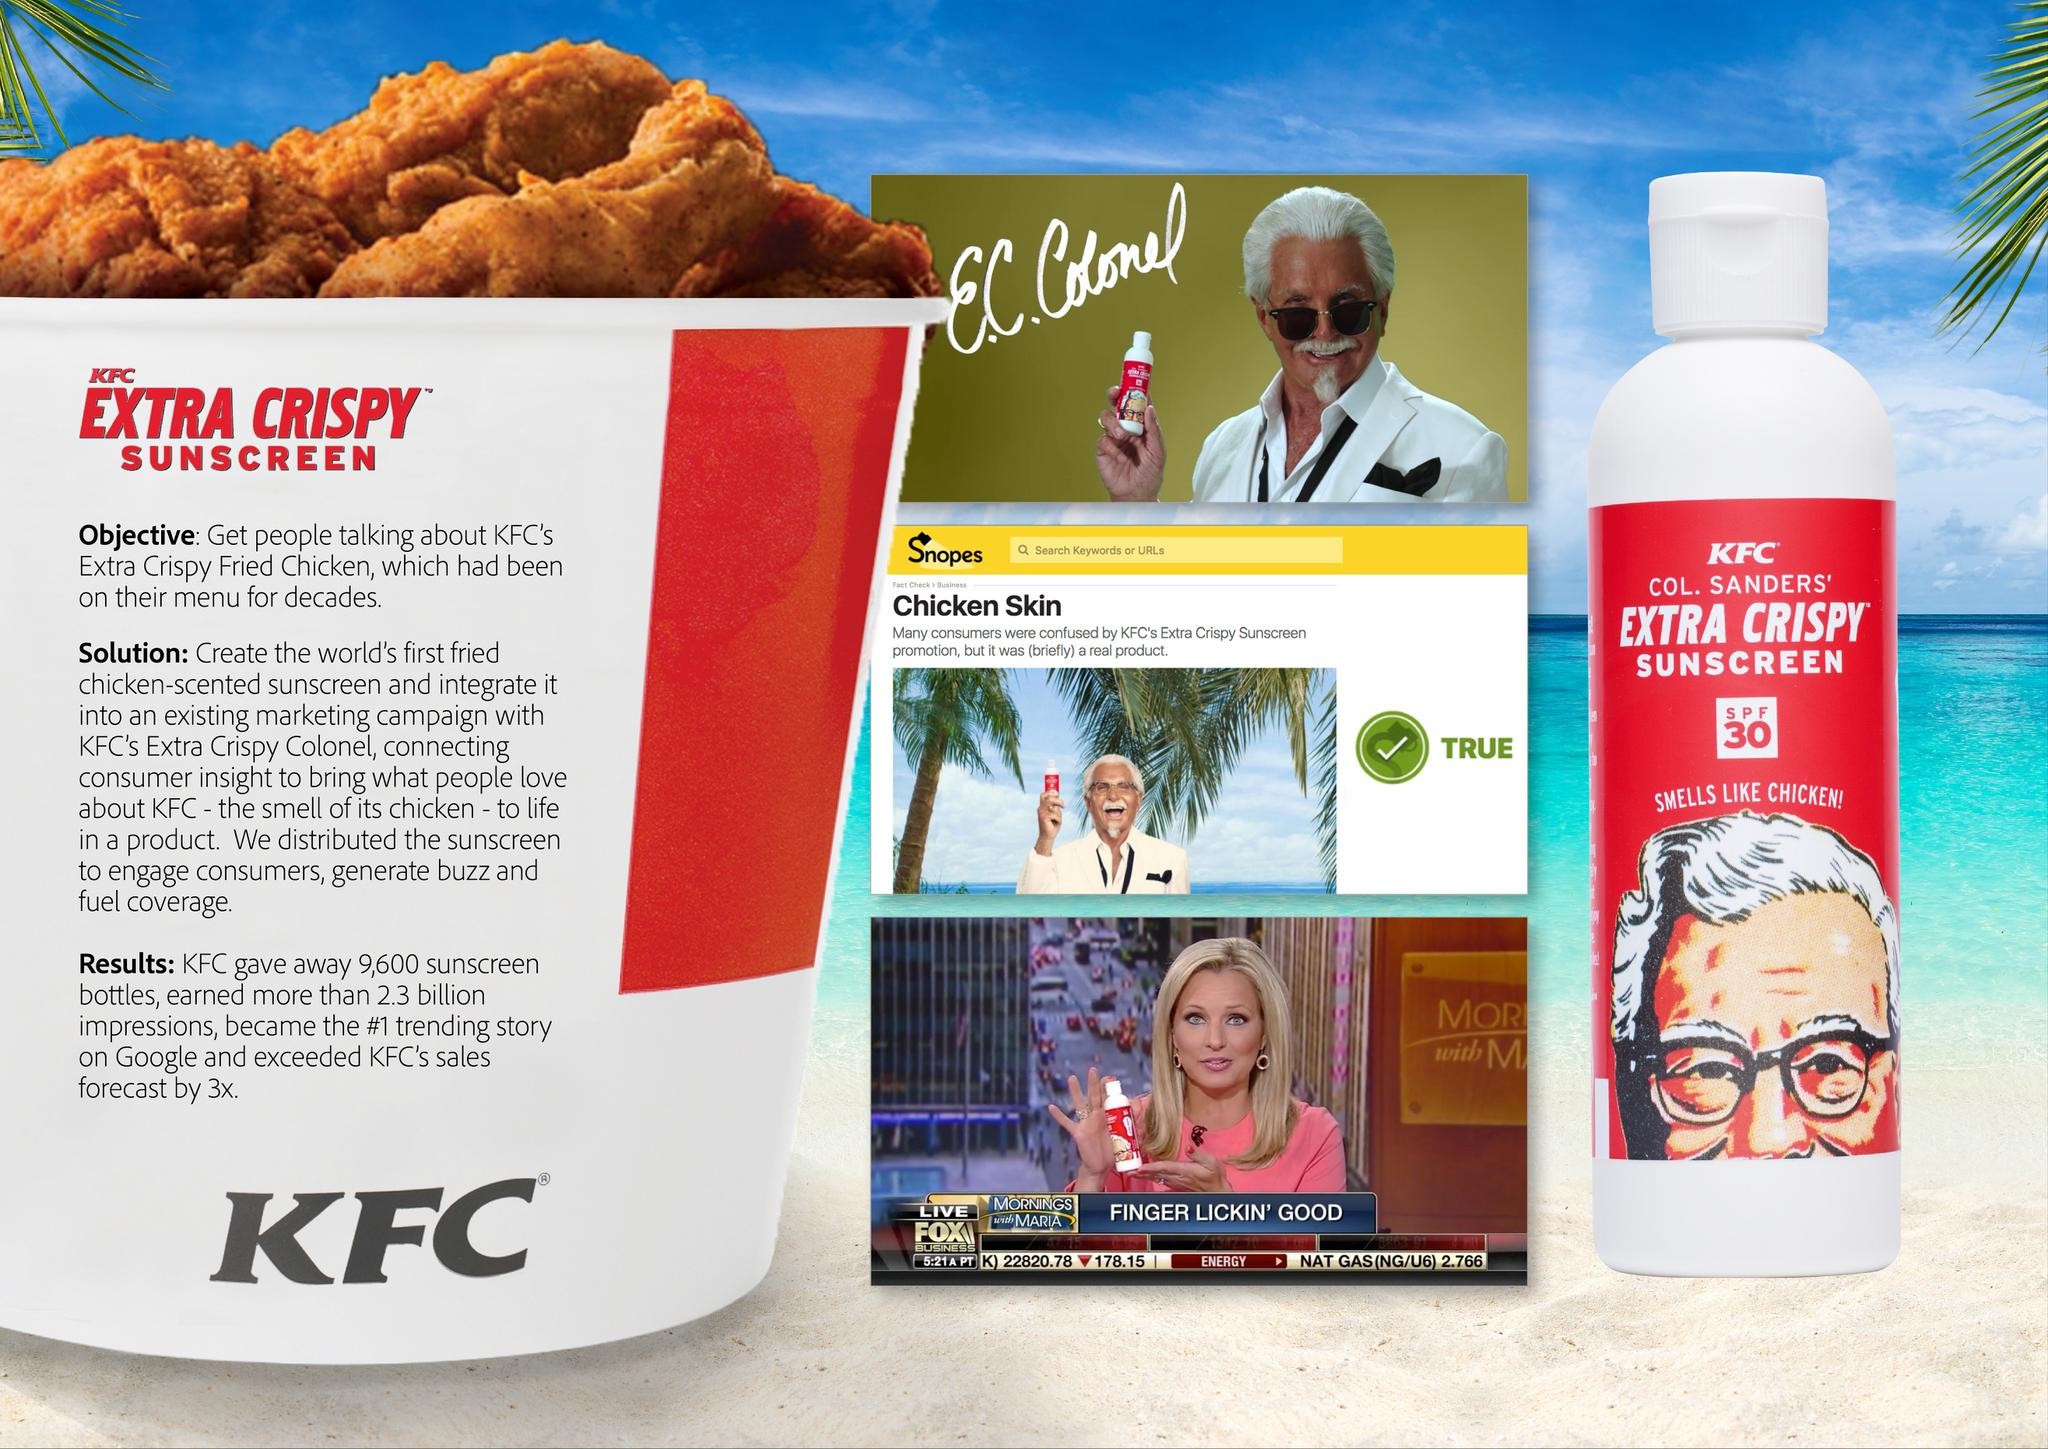 KFC Extra Crispy Sunscreen